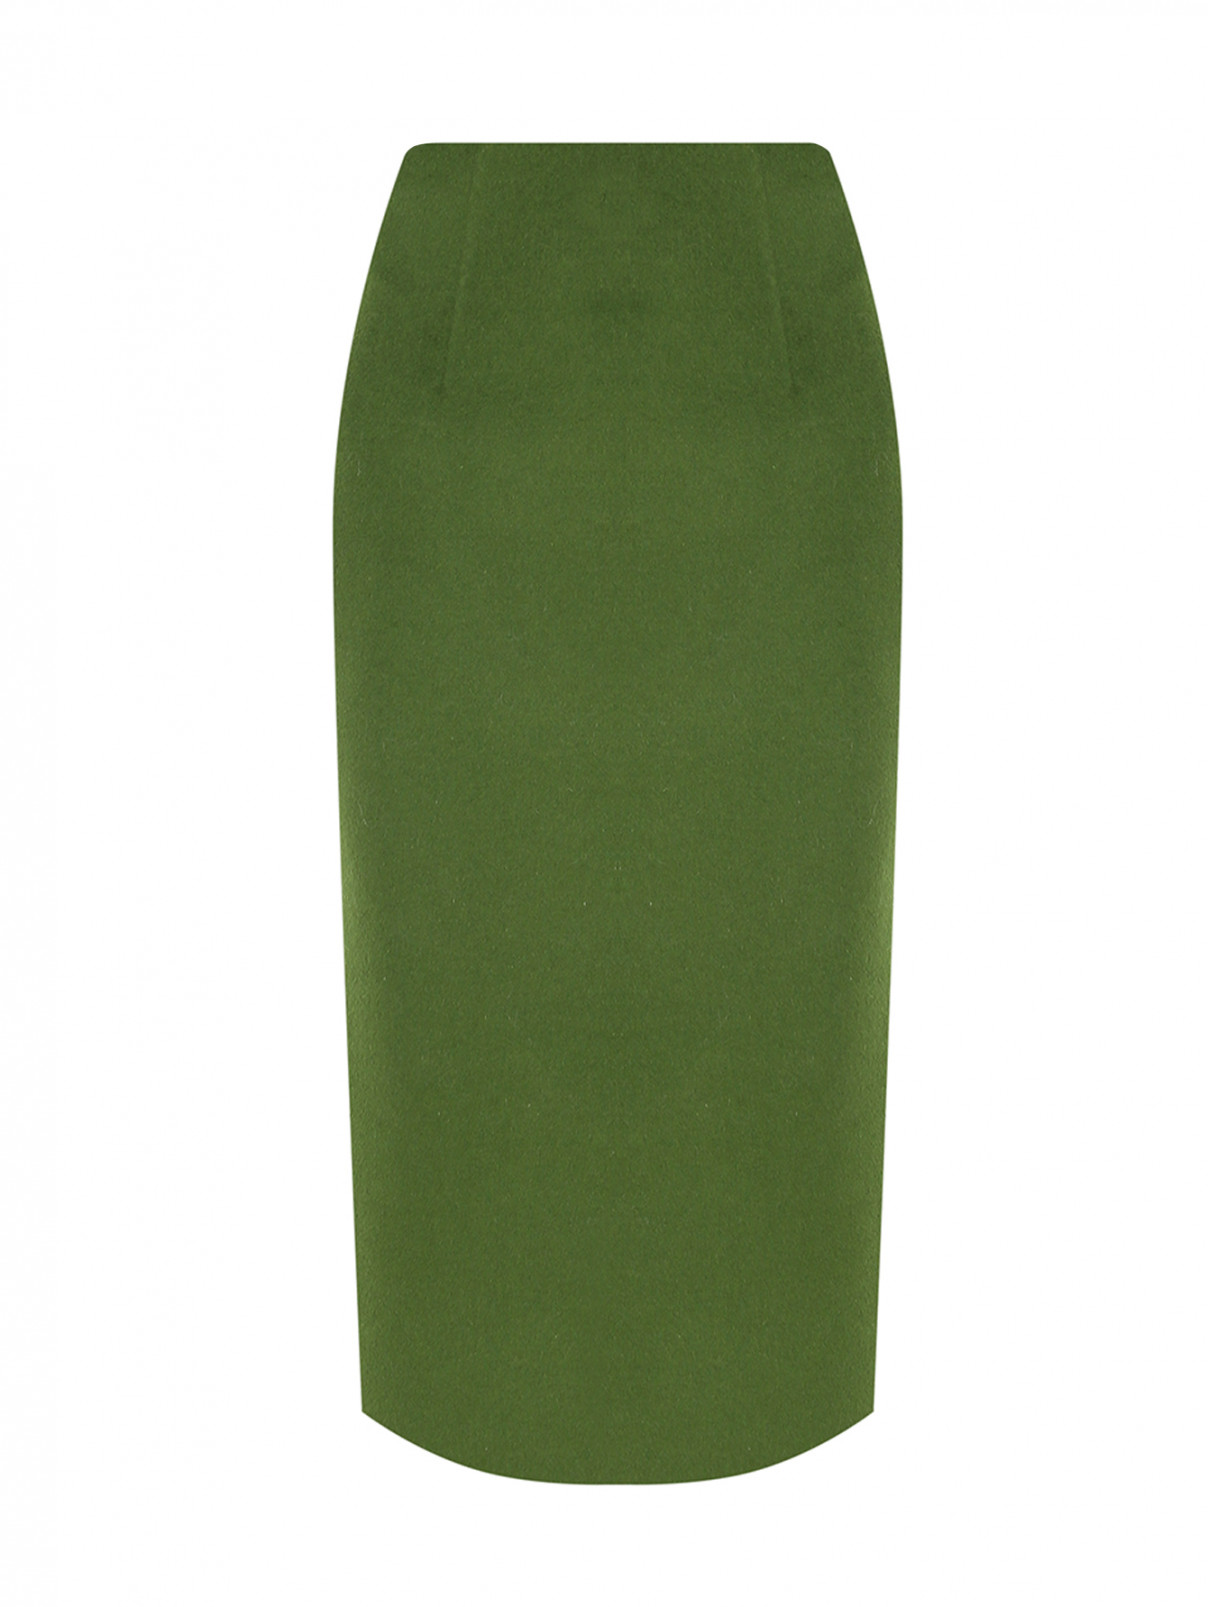 Юбка-карандаш из шерсти Luisa Spagnoli  –  Общий вид  – Цвет:  Зеленый